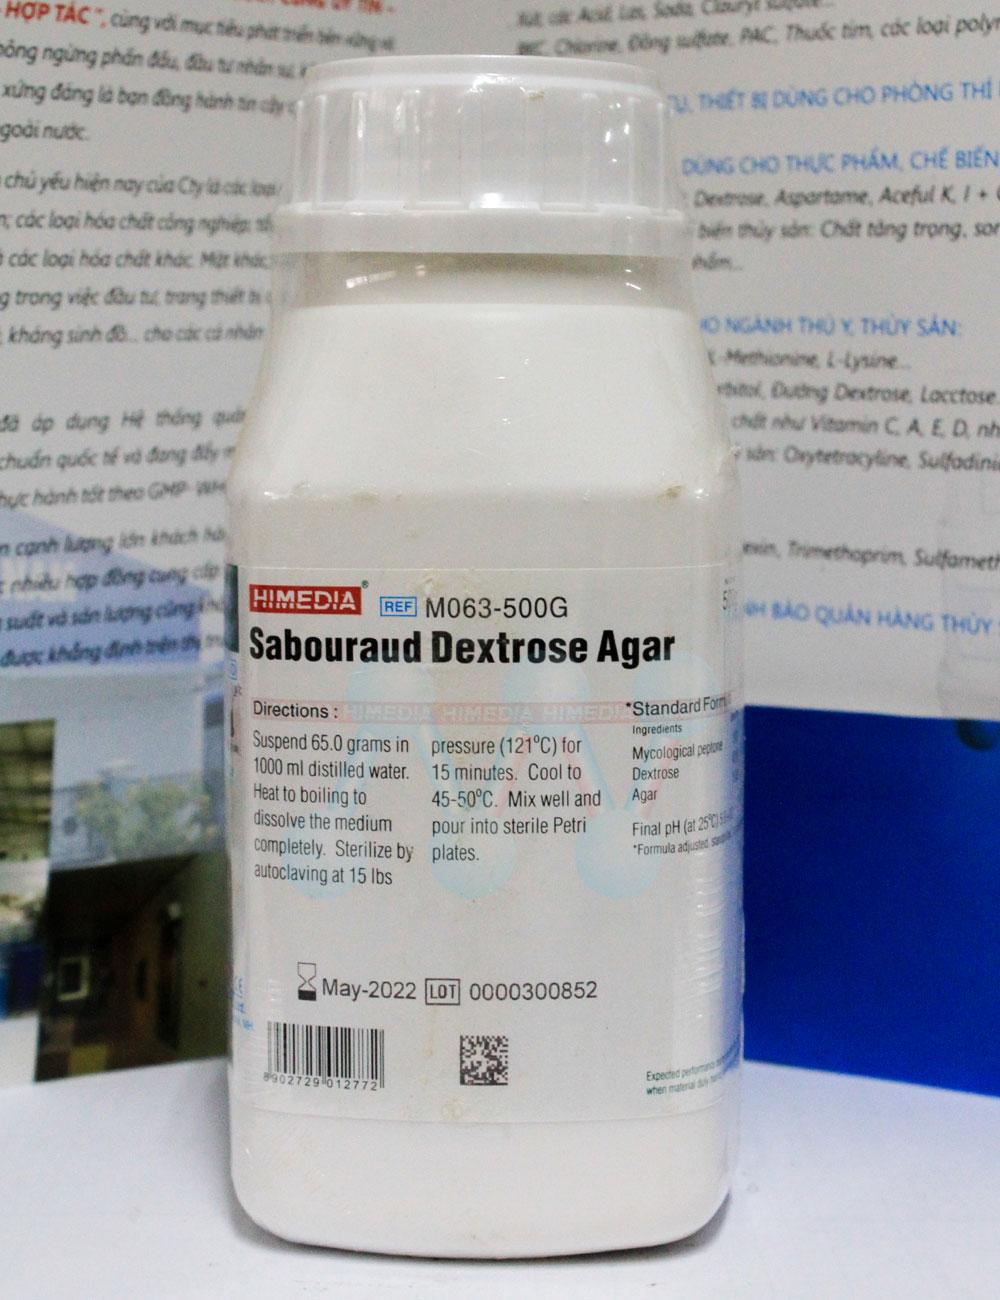 Sabouraud Dextrose Agar